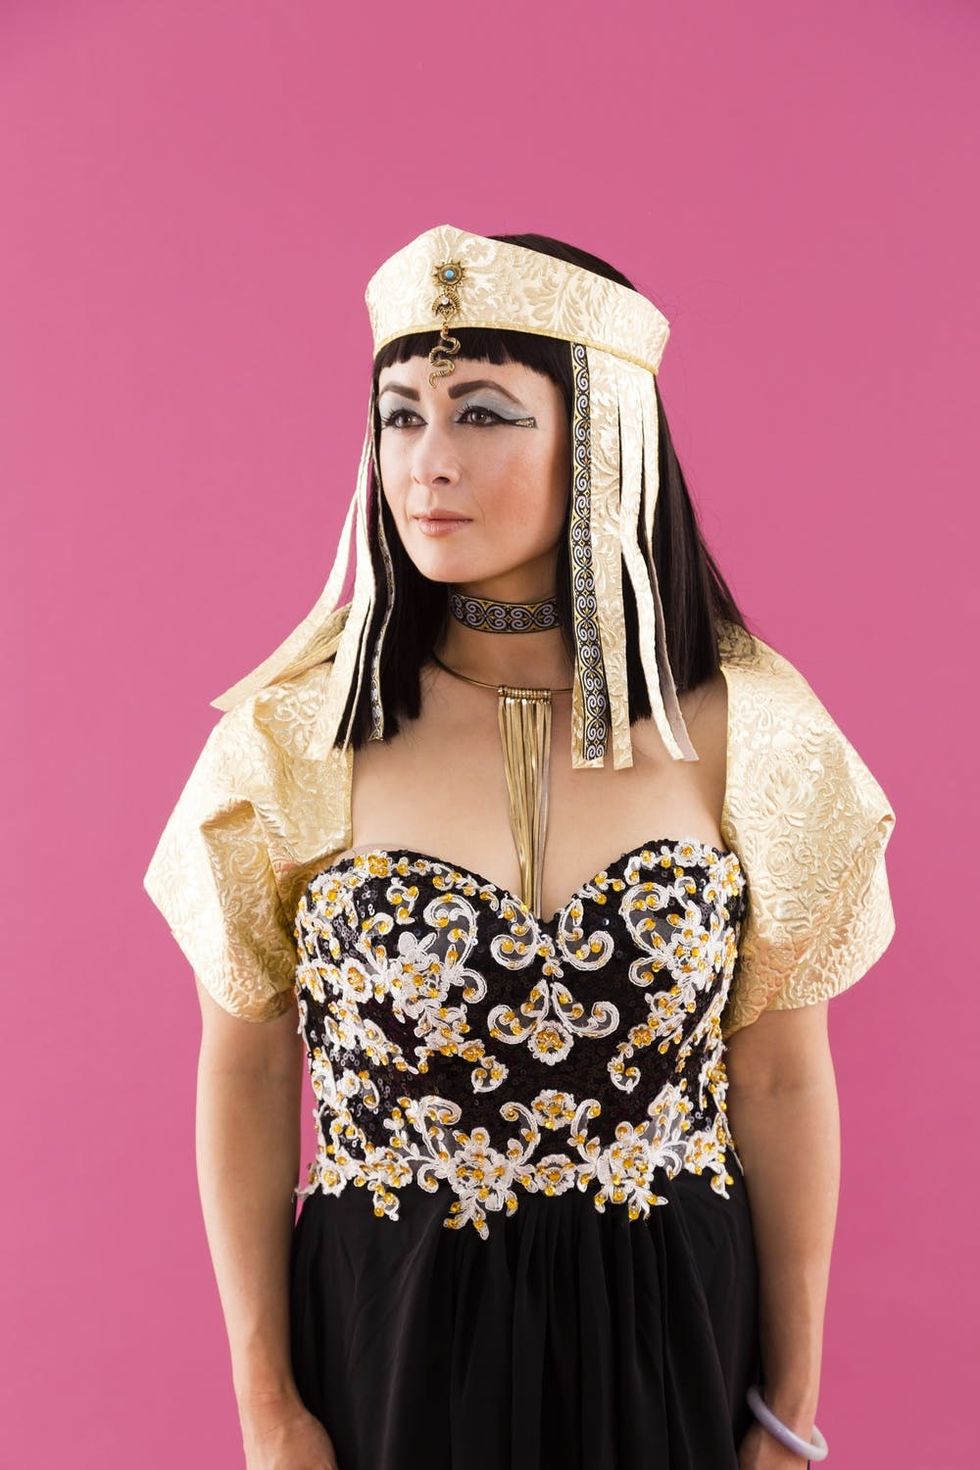 DIY Advanced Cleopatra Halloween Costume